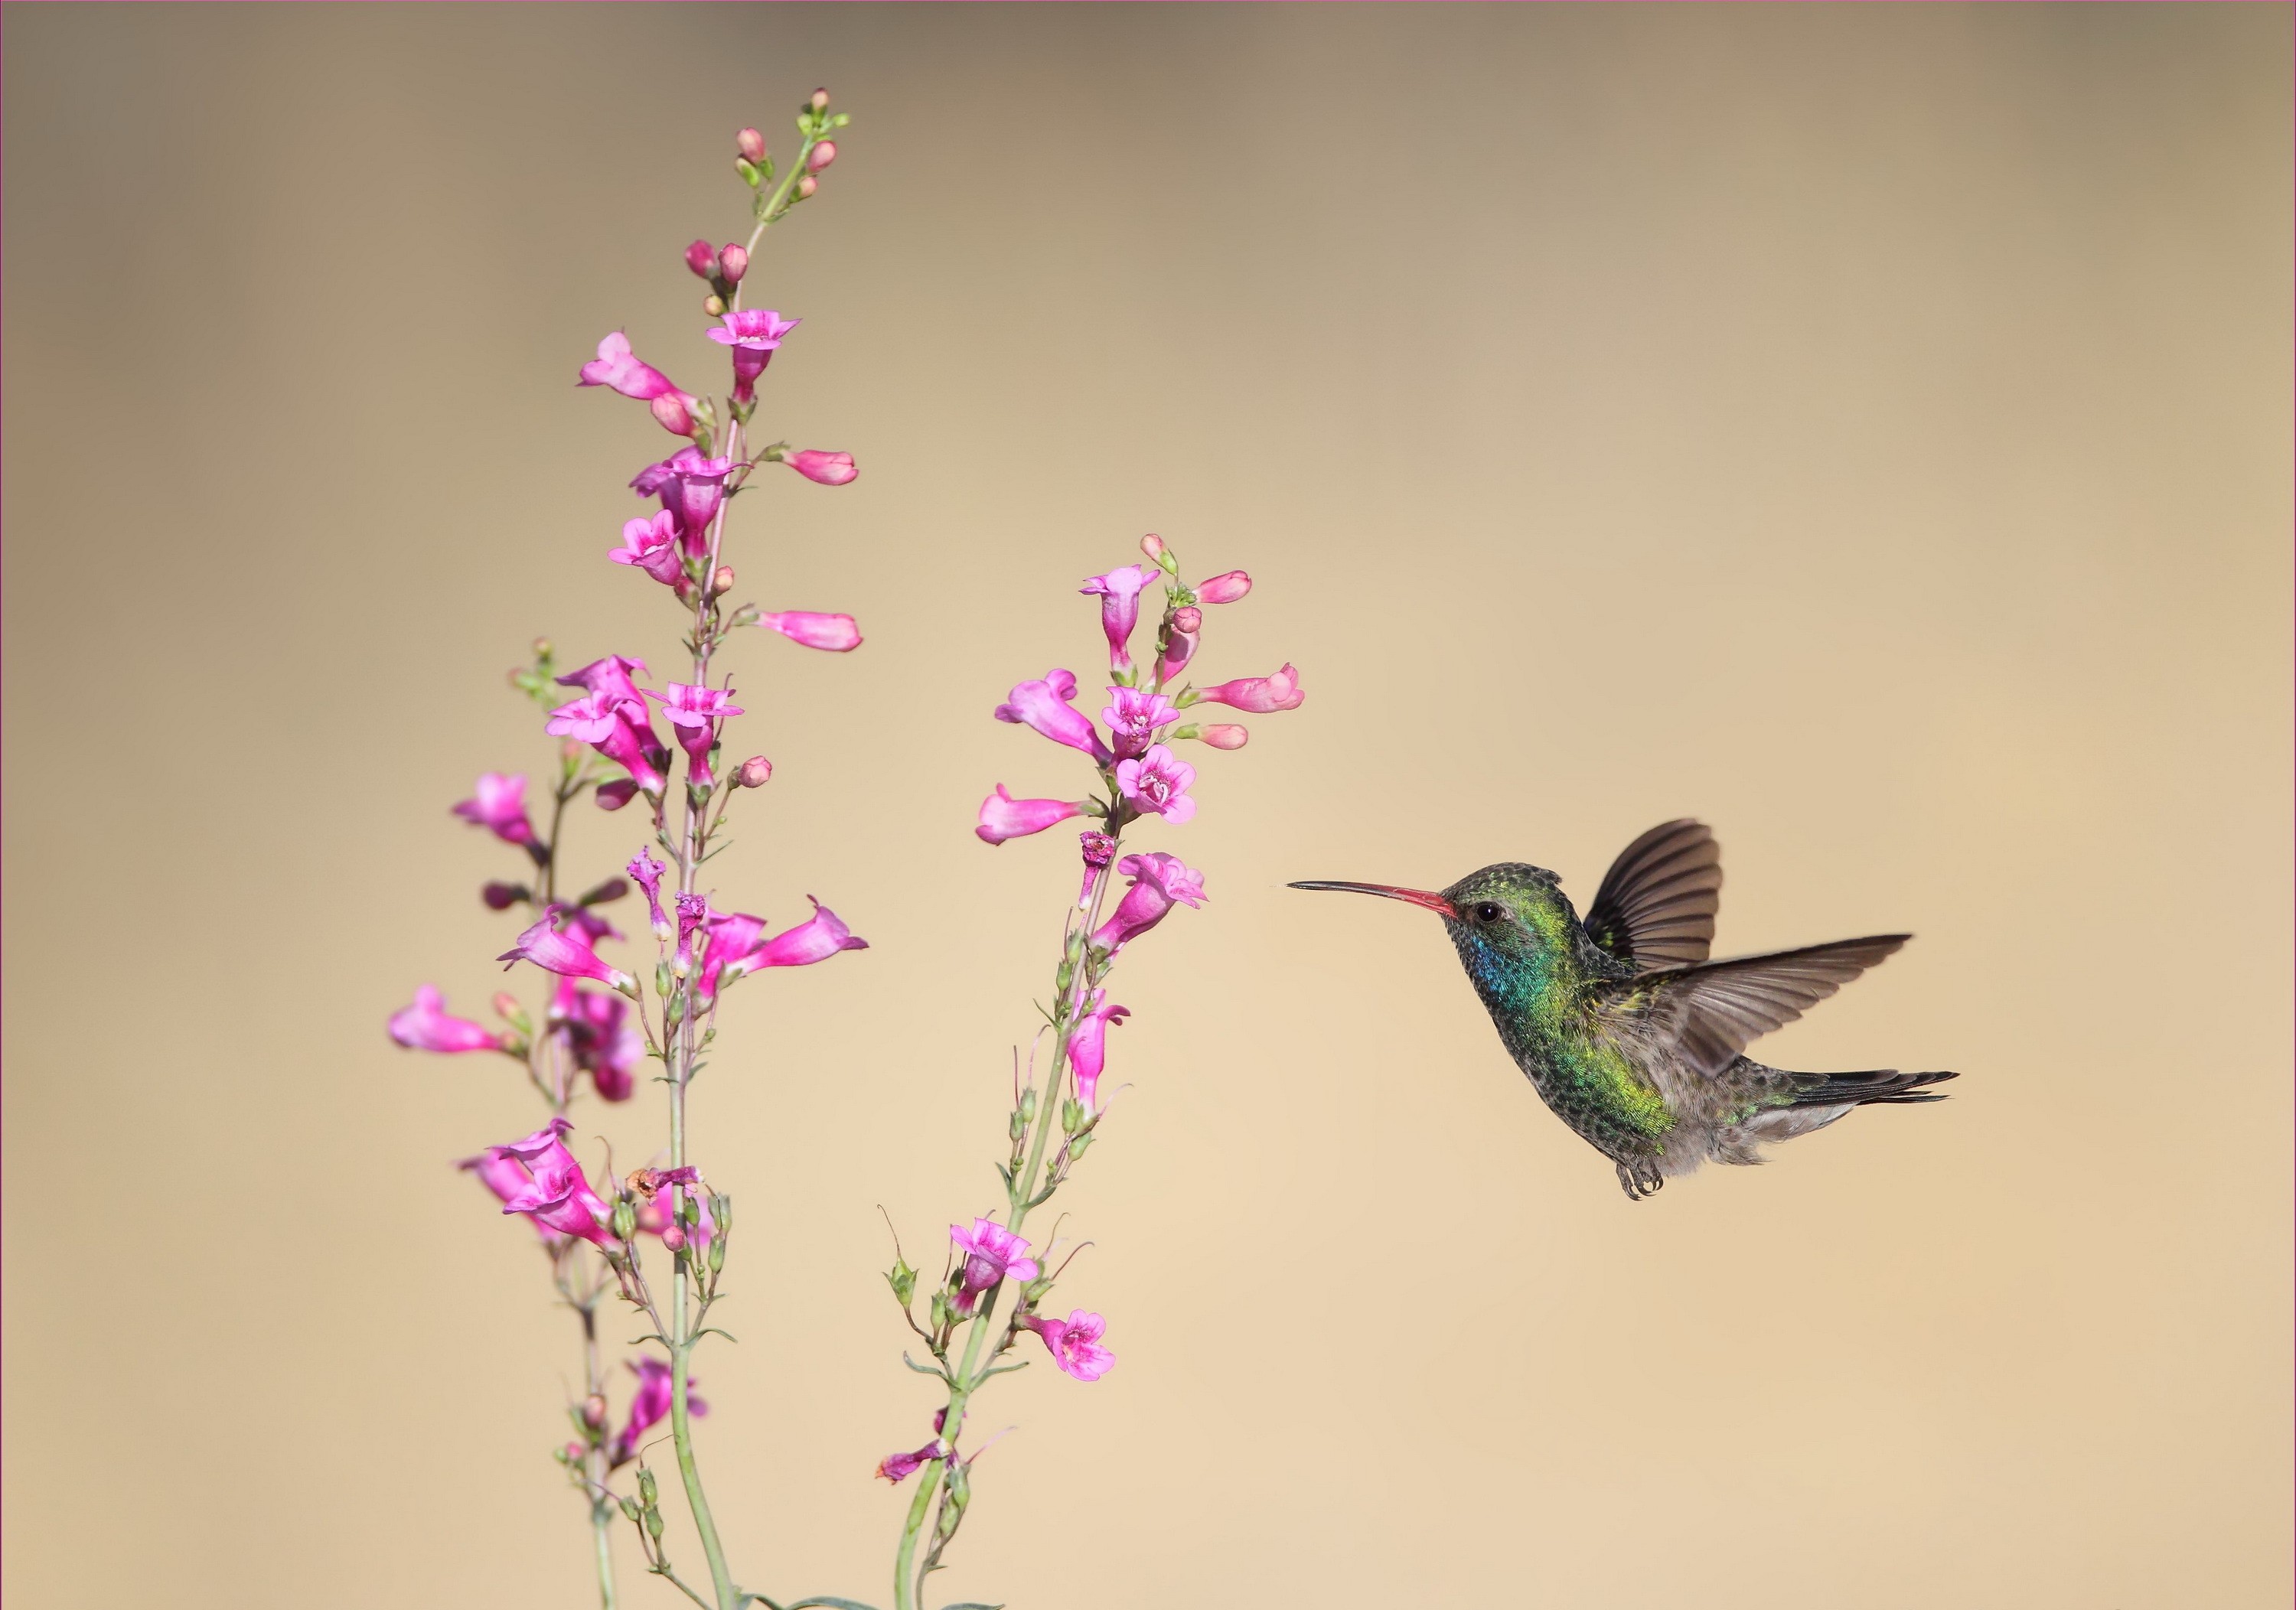 General 3000x2104 animals flowers birds hummingbirds plants